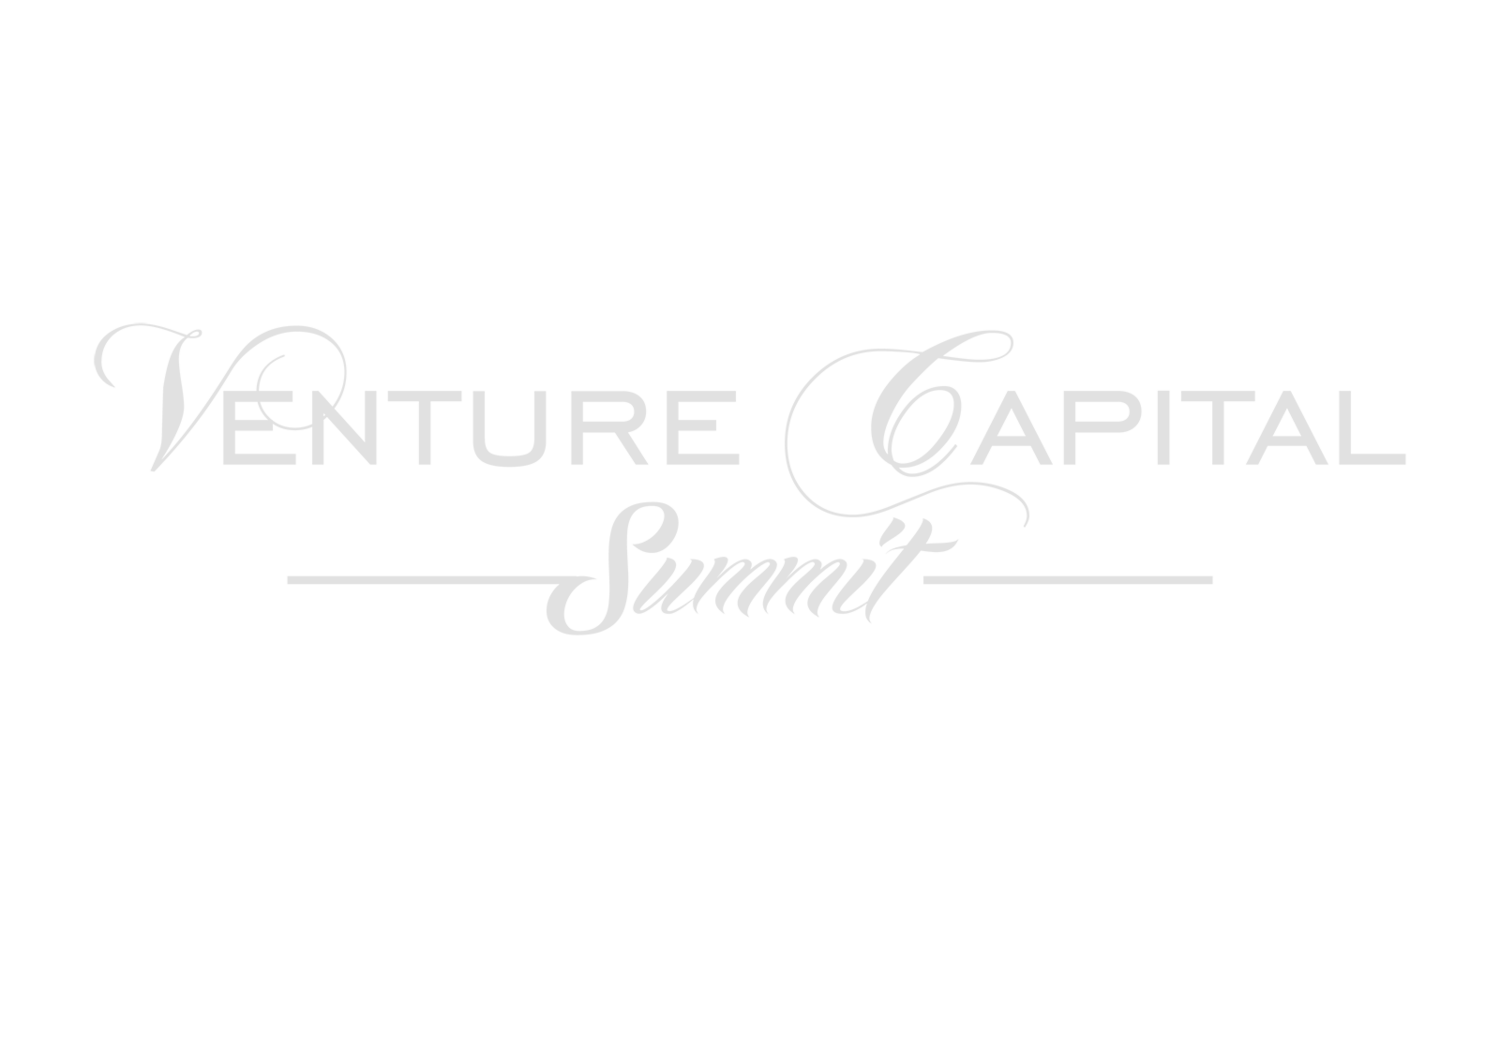 Venture Capital Summit